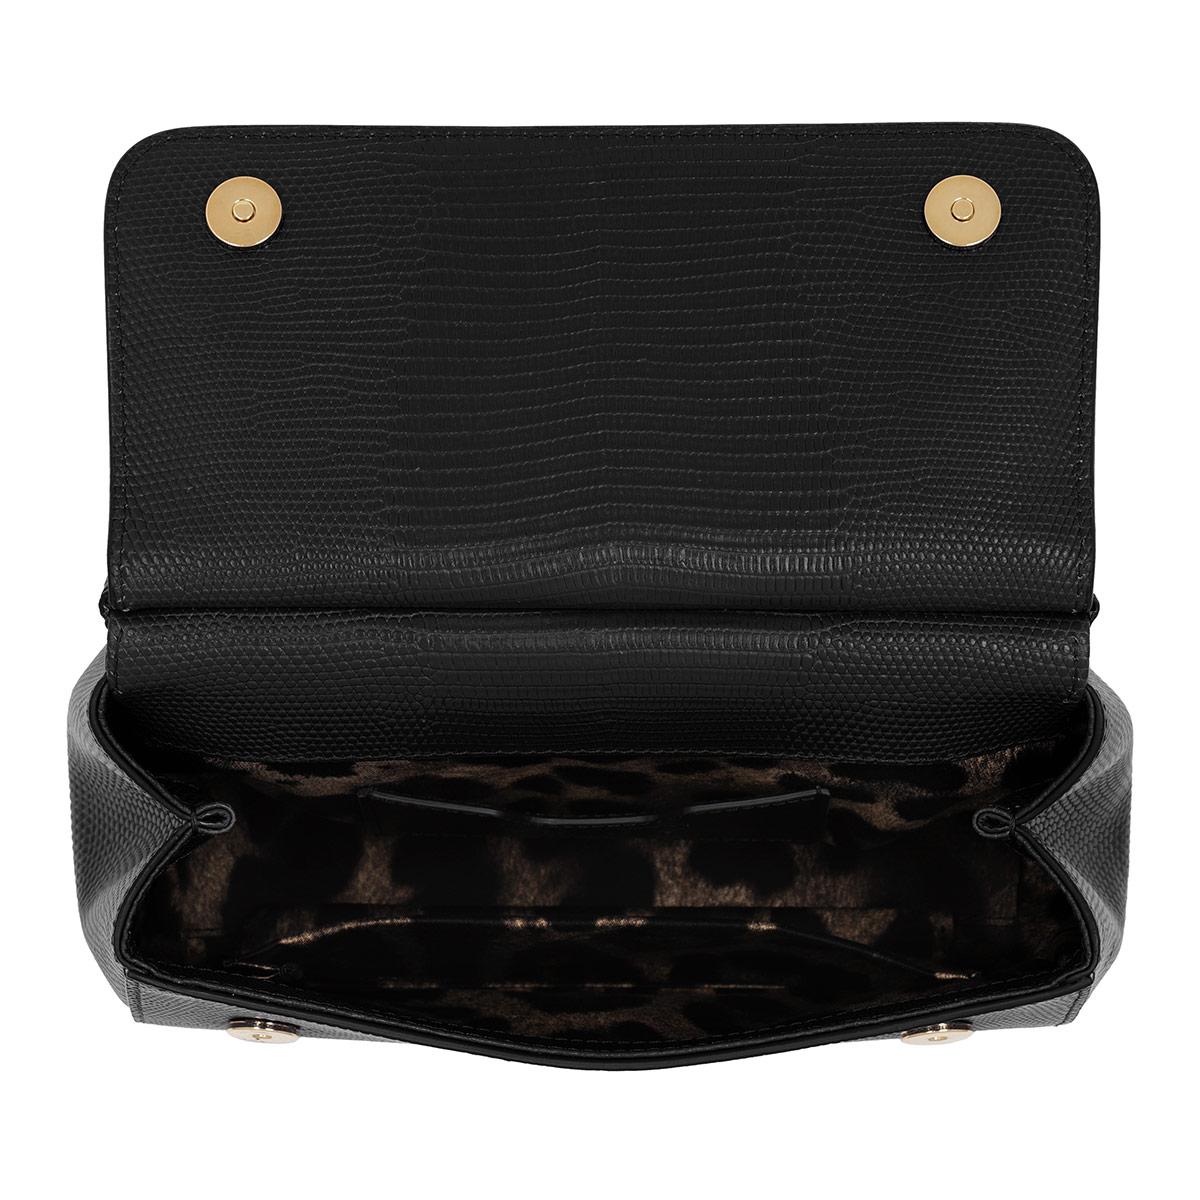 Dolce&Gabbana Small Sicily Bag Leather Black, Mini Bag